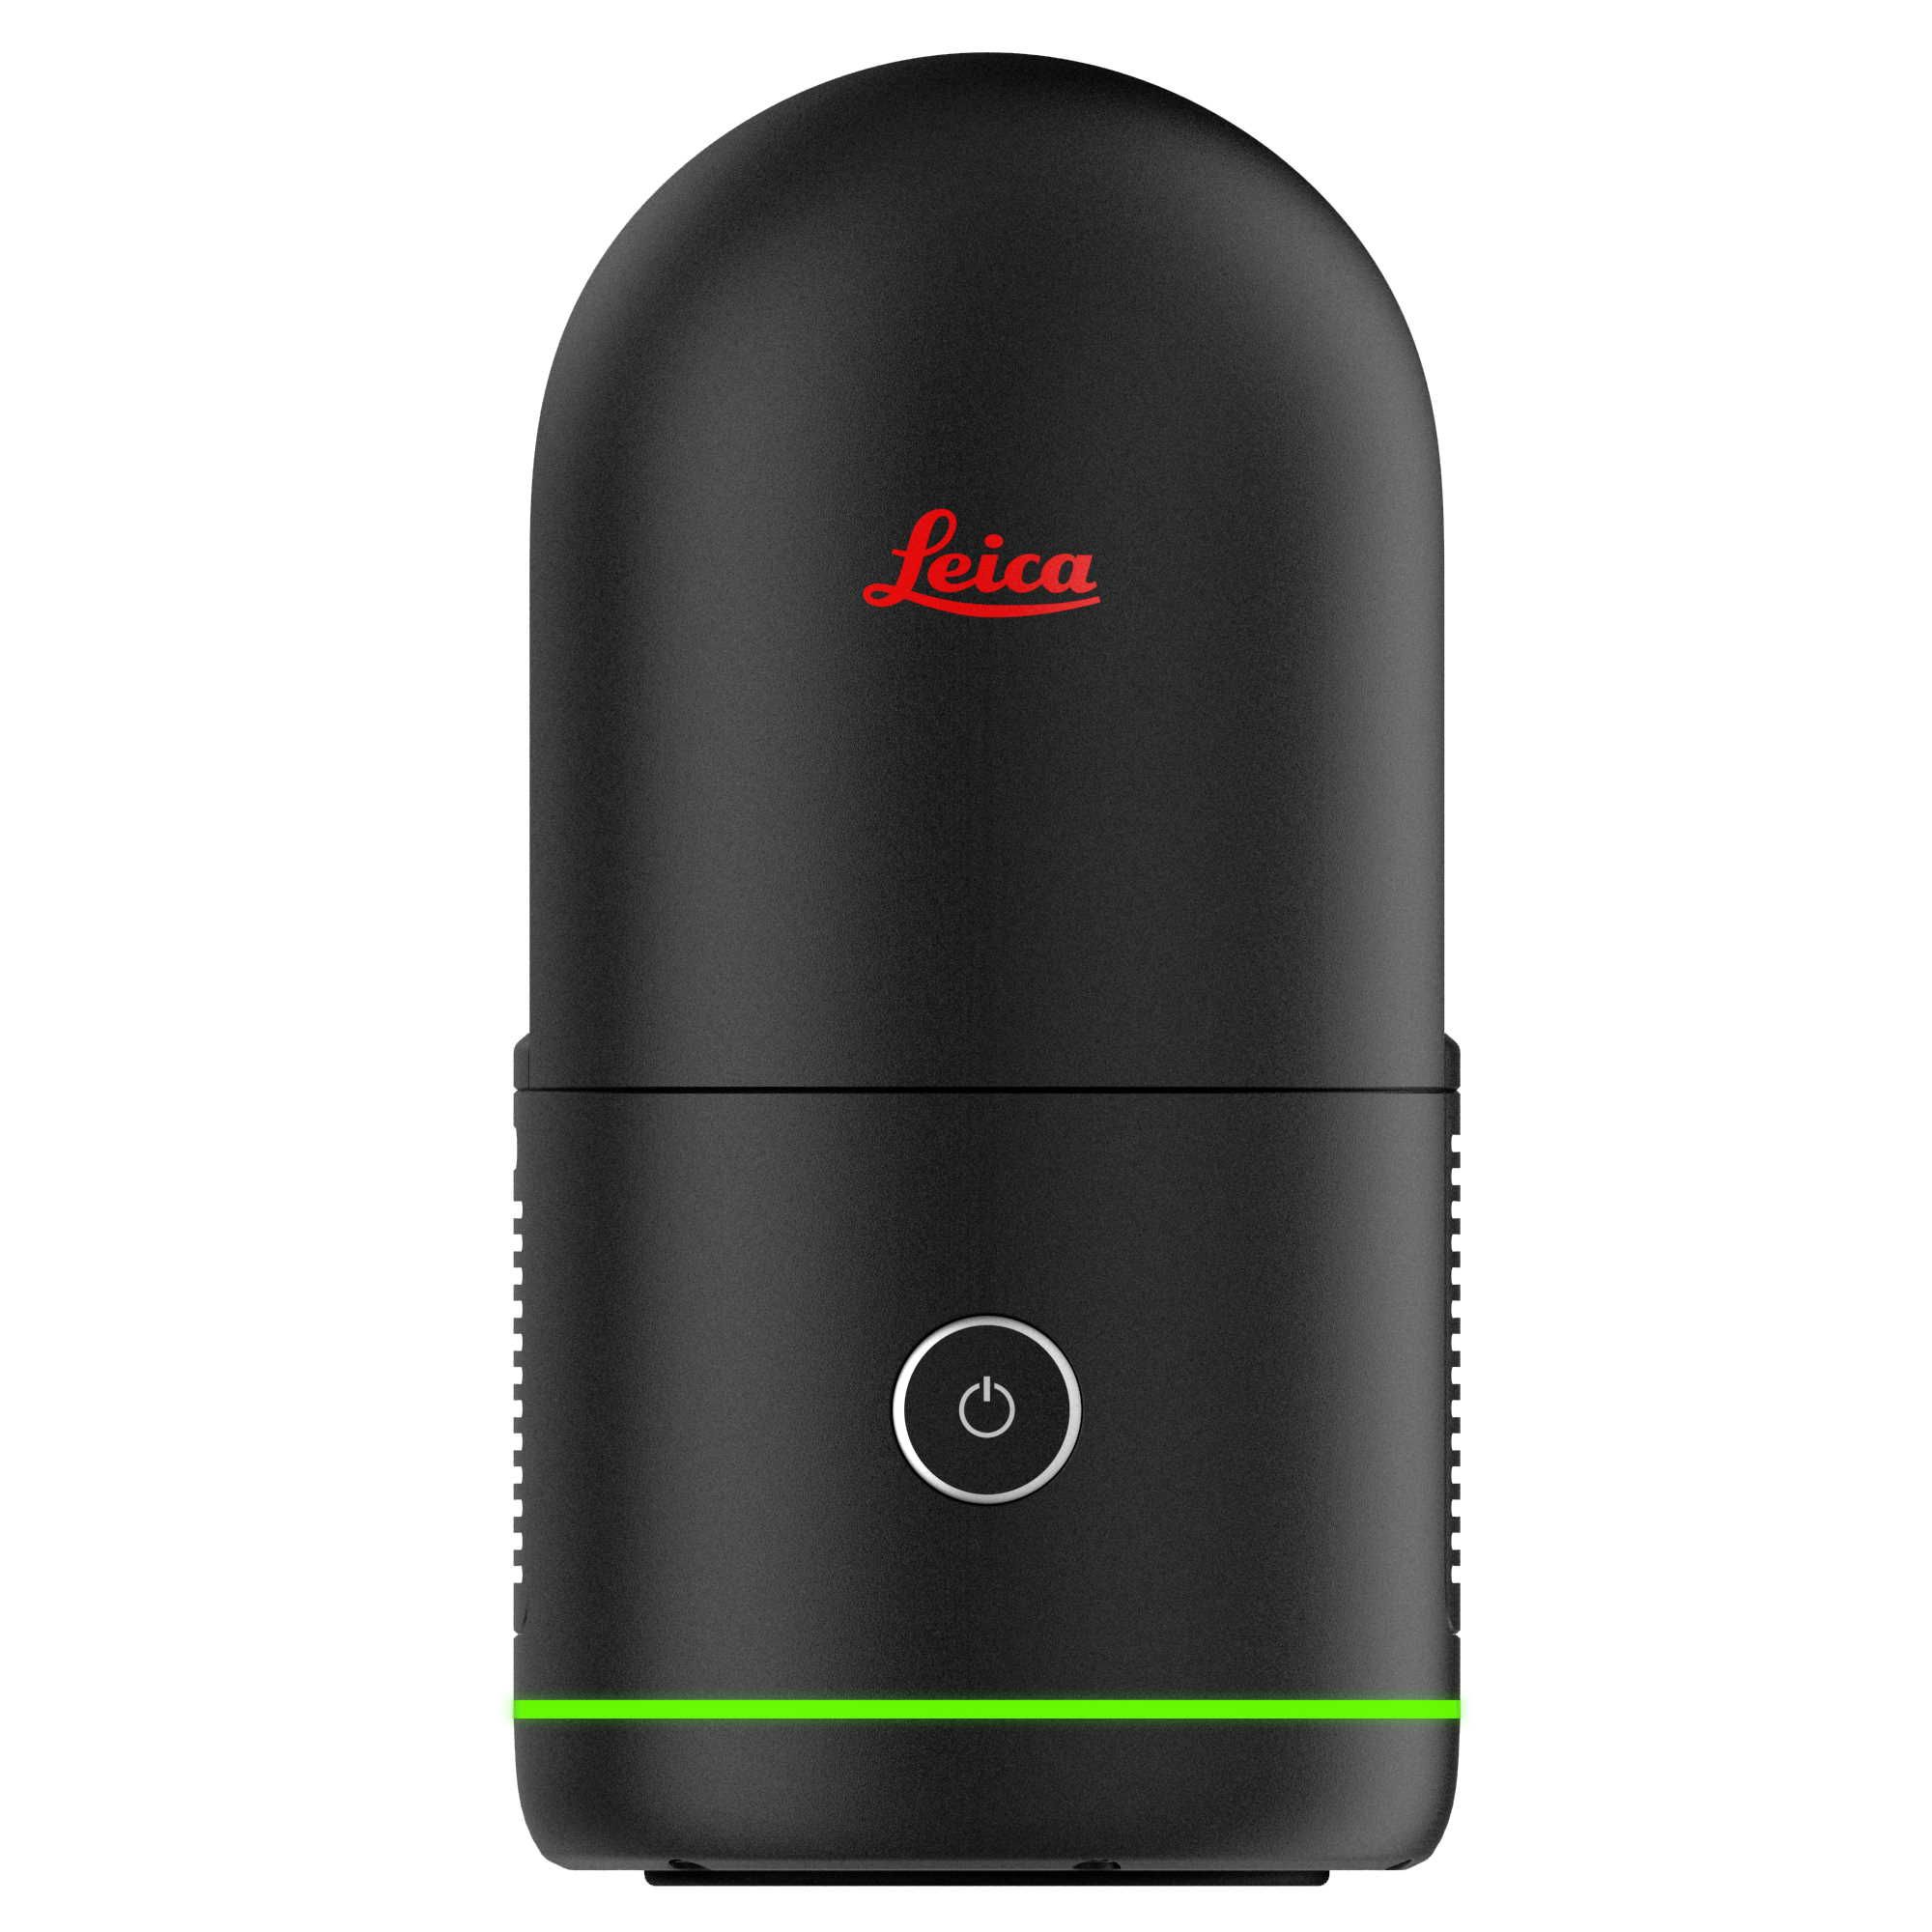 Leica All New BLK360 3D Laser Scanner